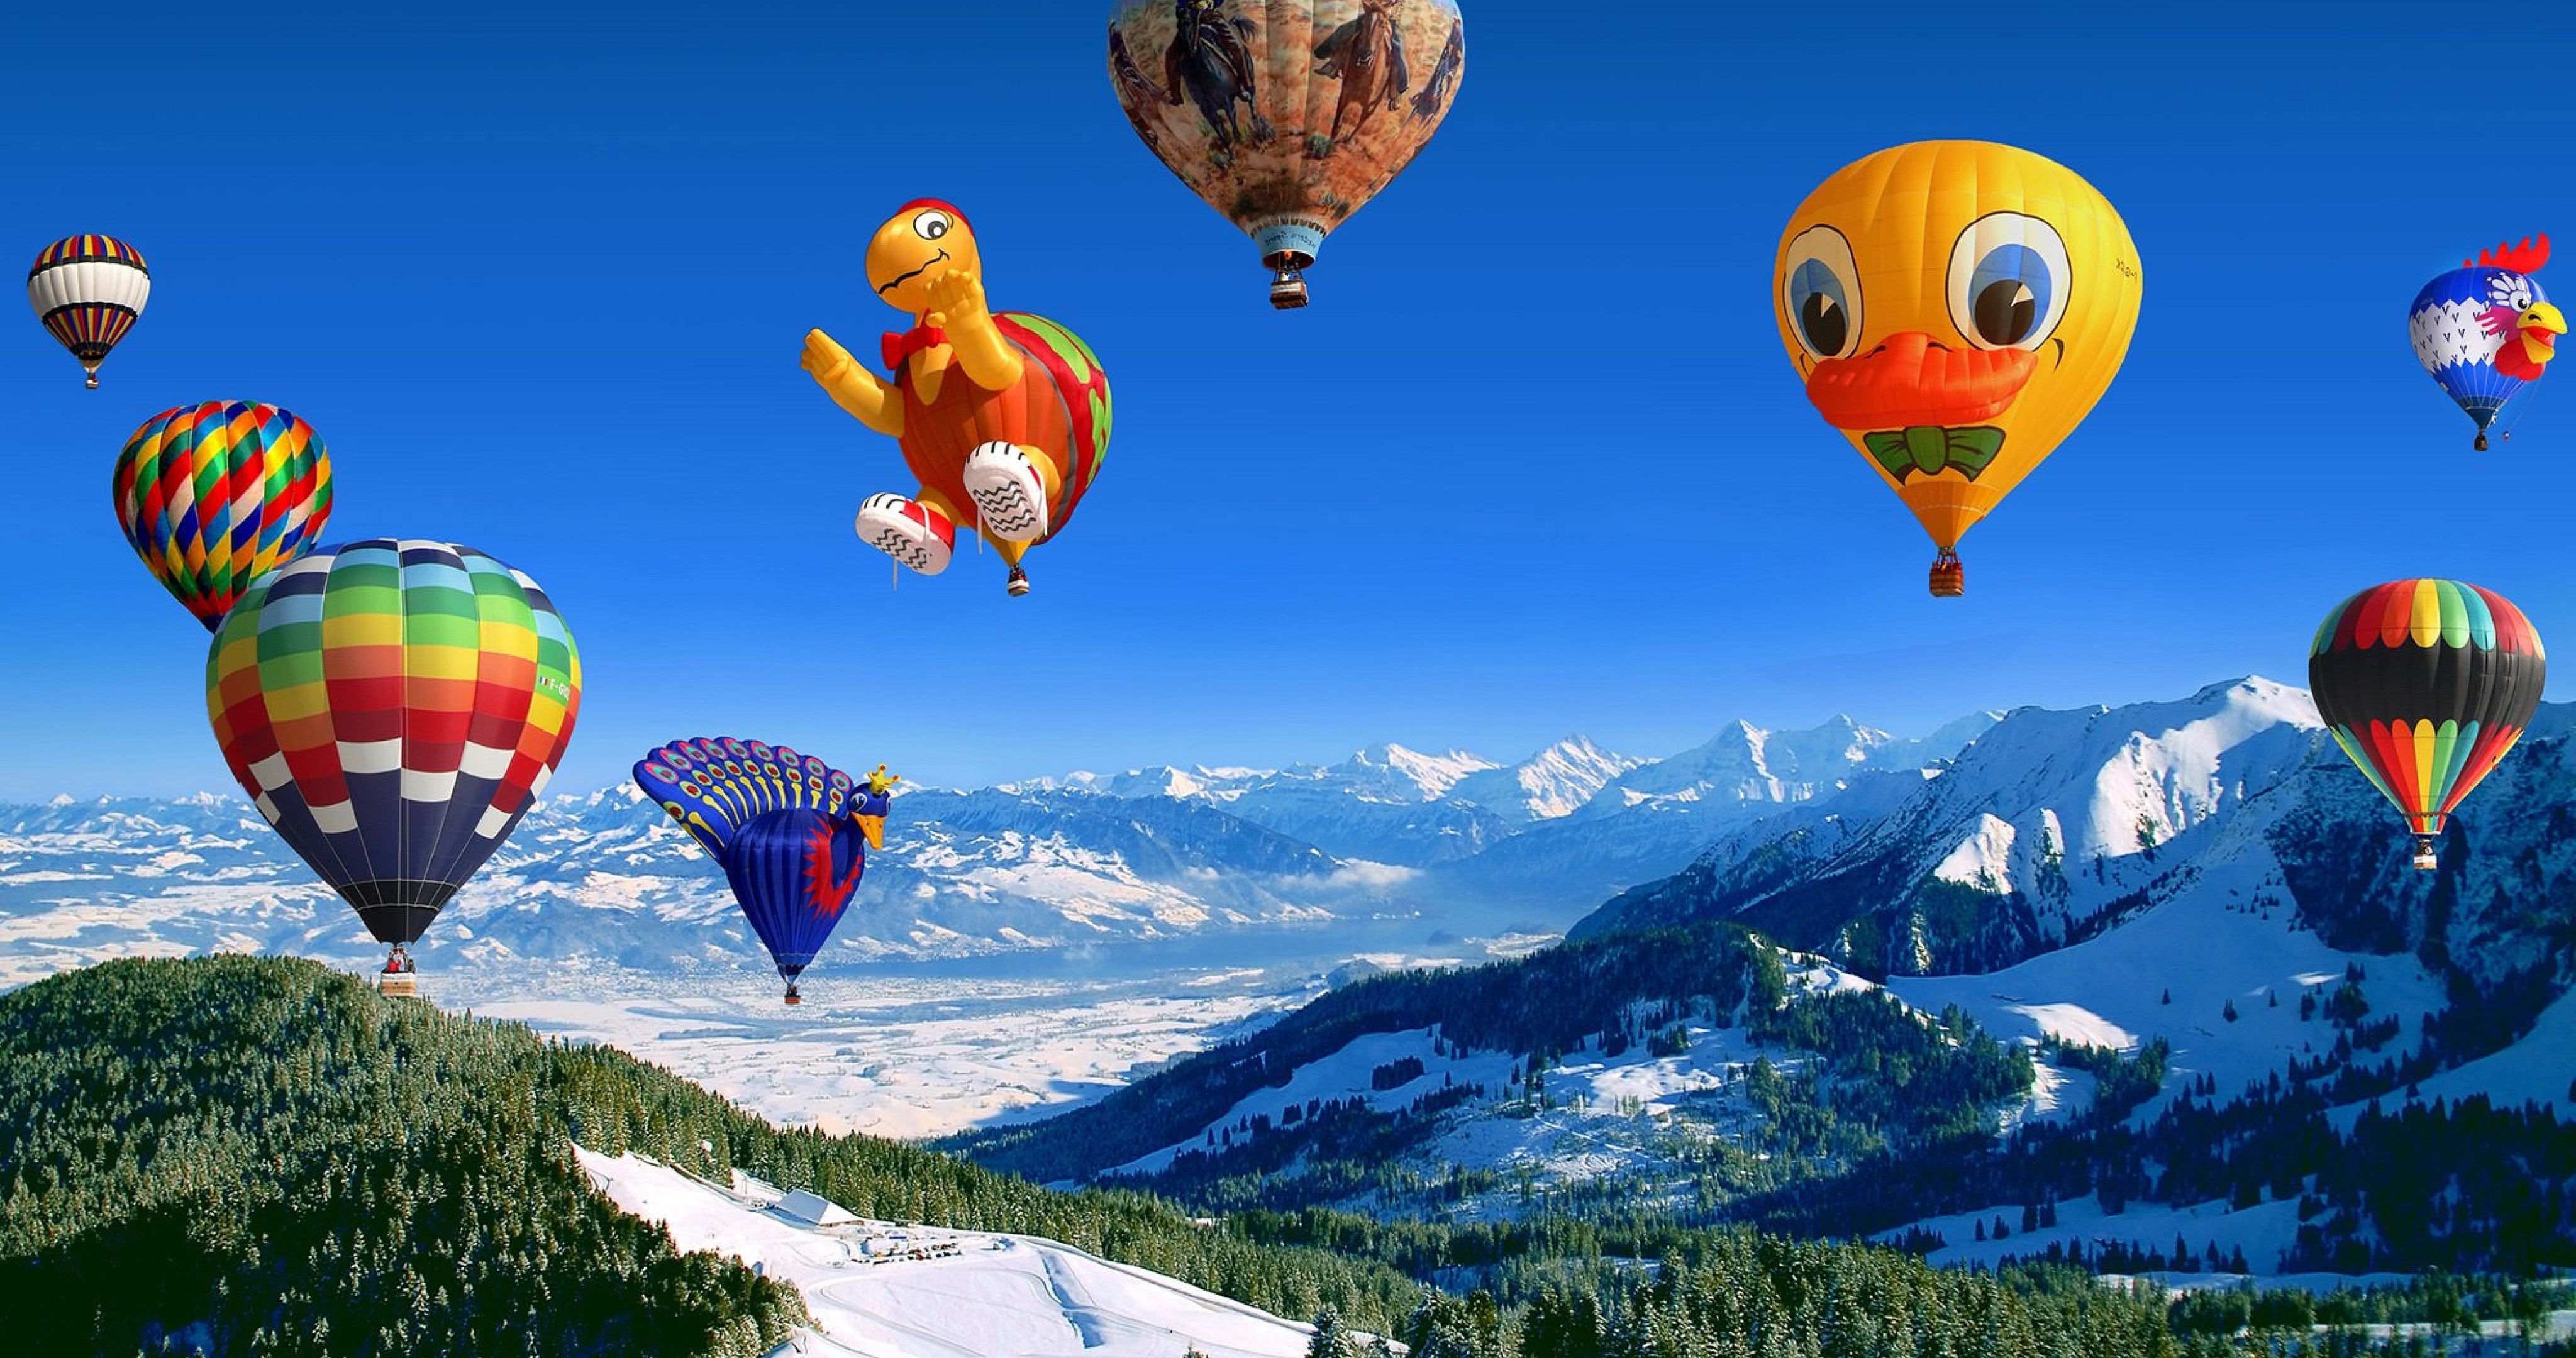 funny air balloons 4k ultra HD wallpaper. Hot air balloon festival, Air balloon festival, Air balloon